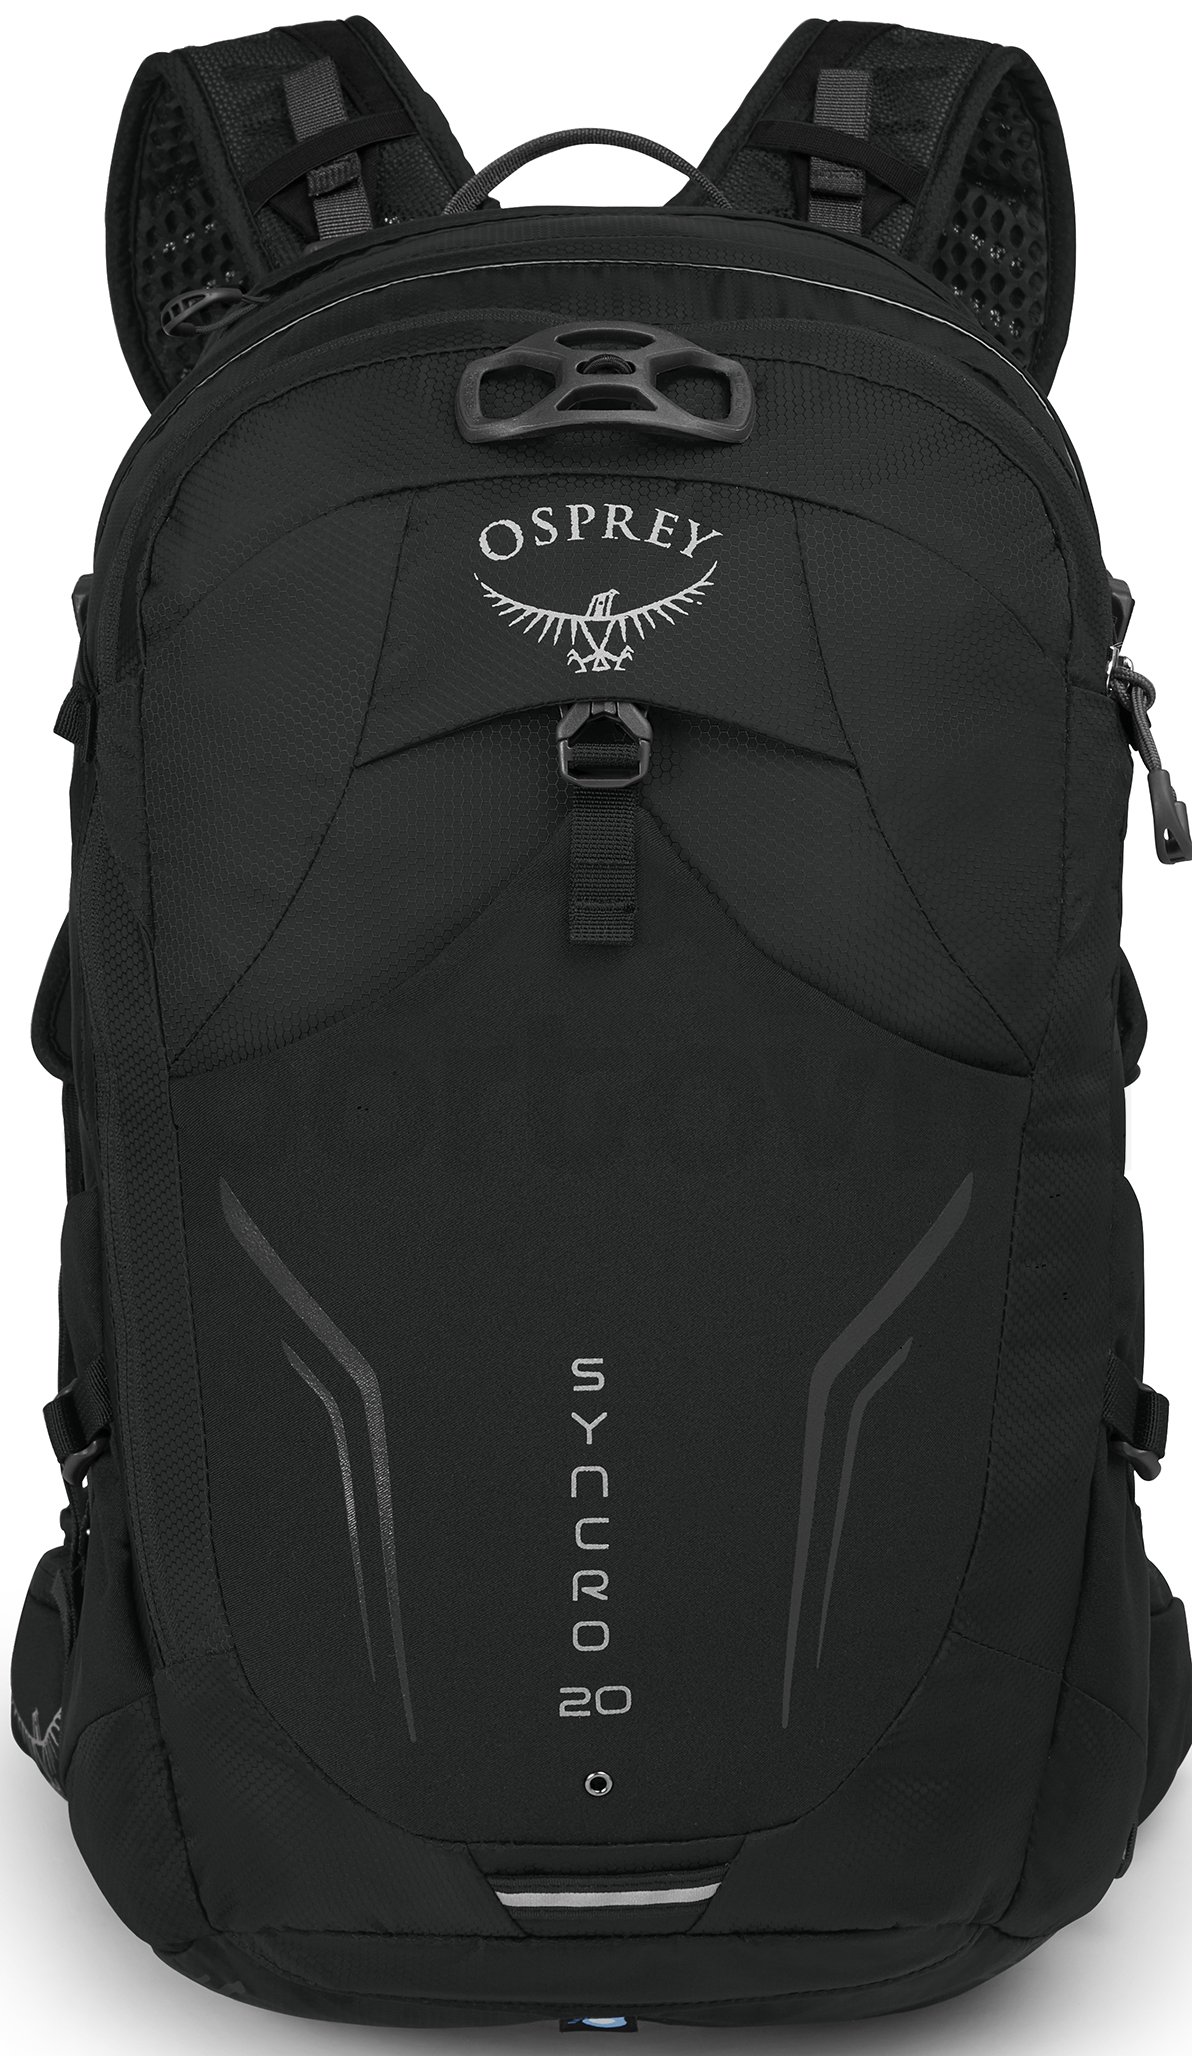 Batoh Osprey Syncro 20 II - černá